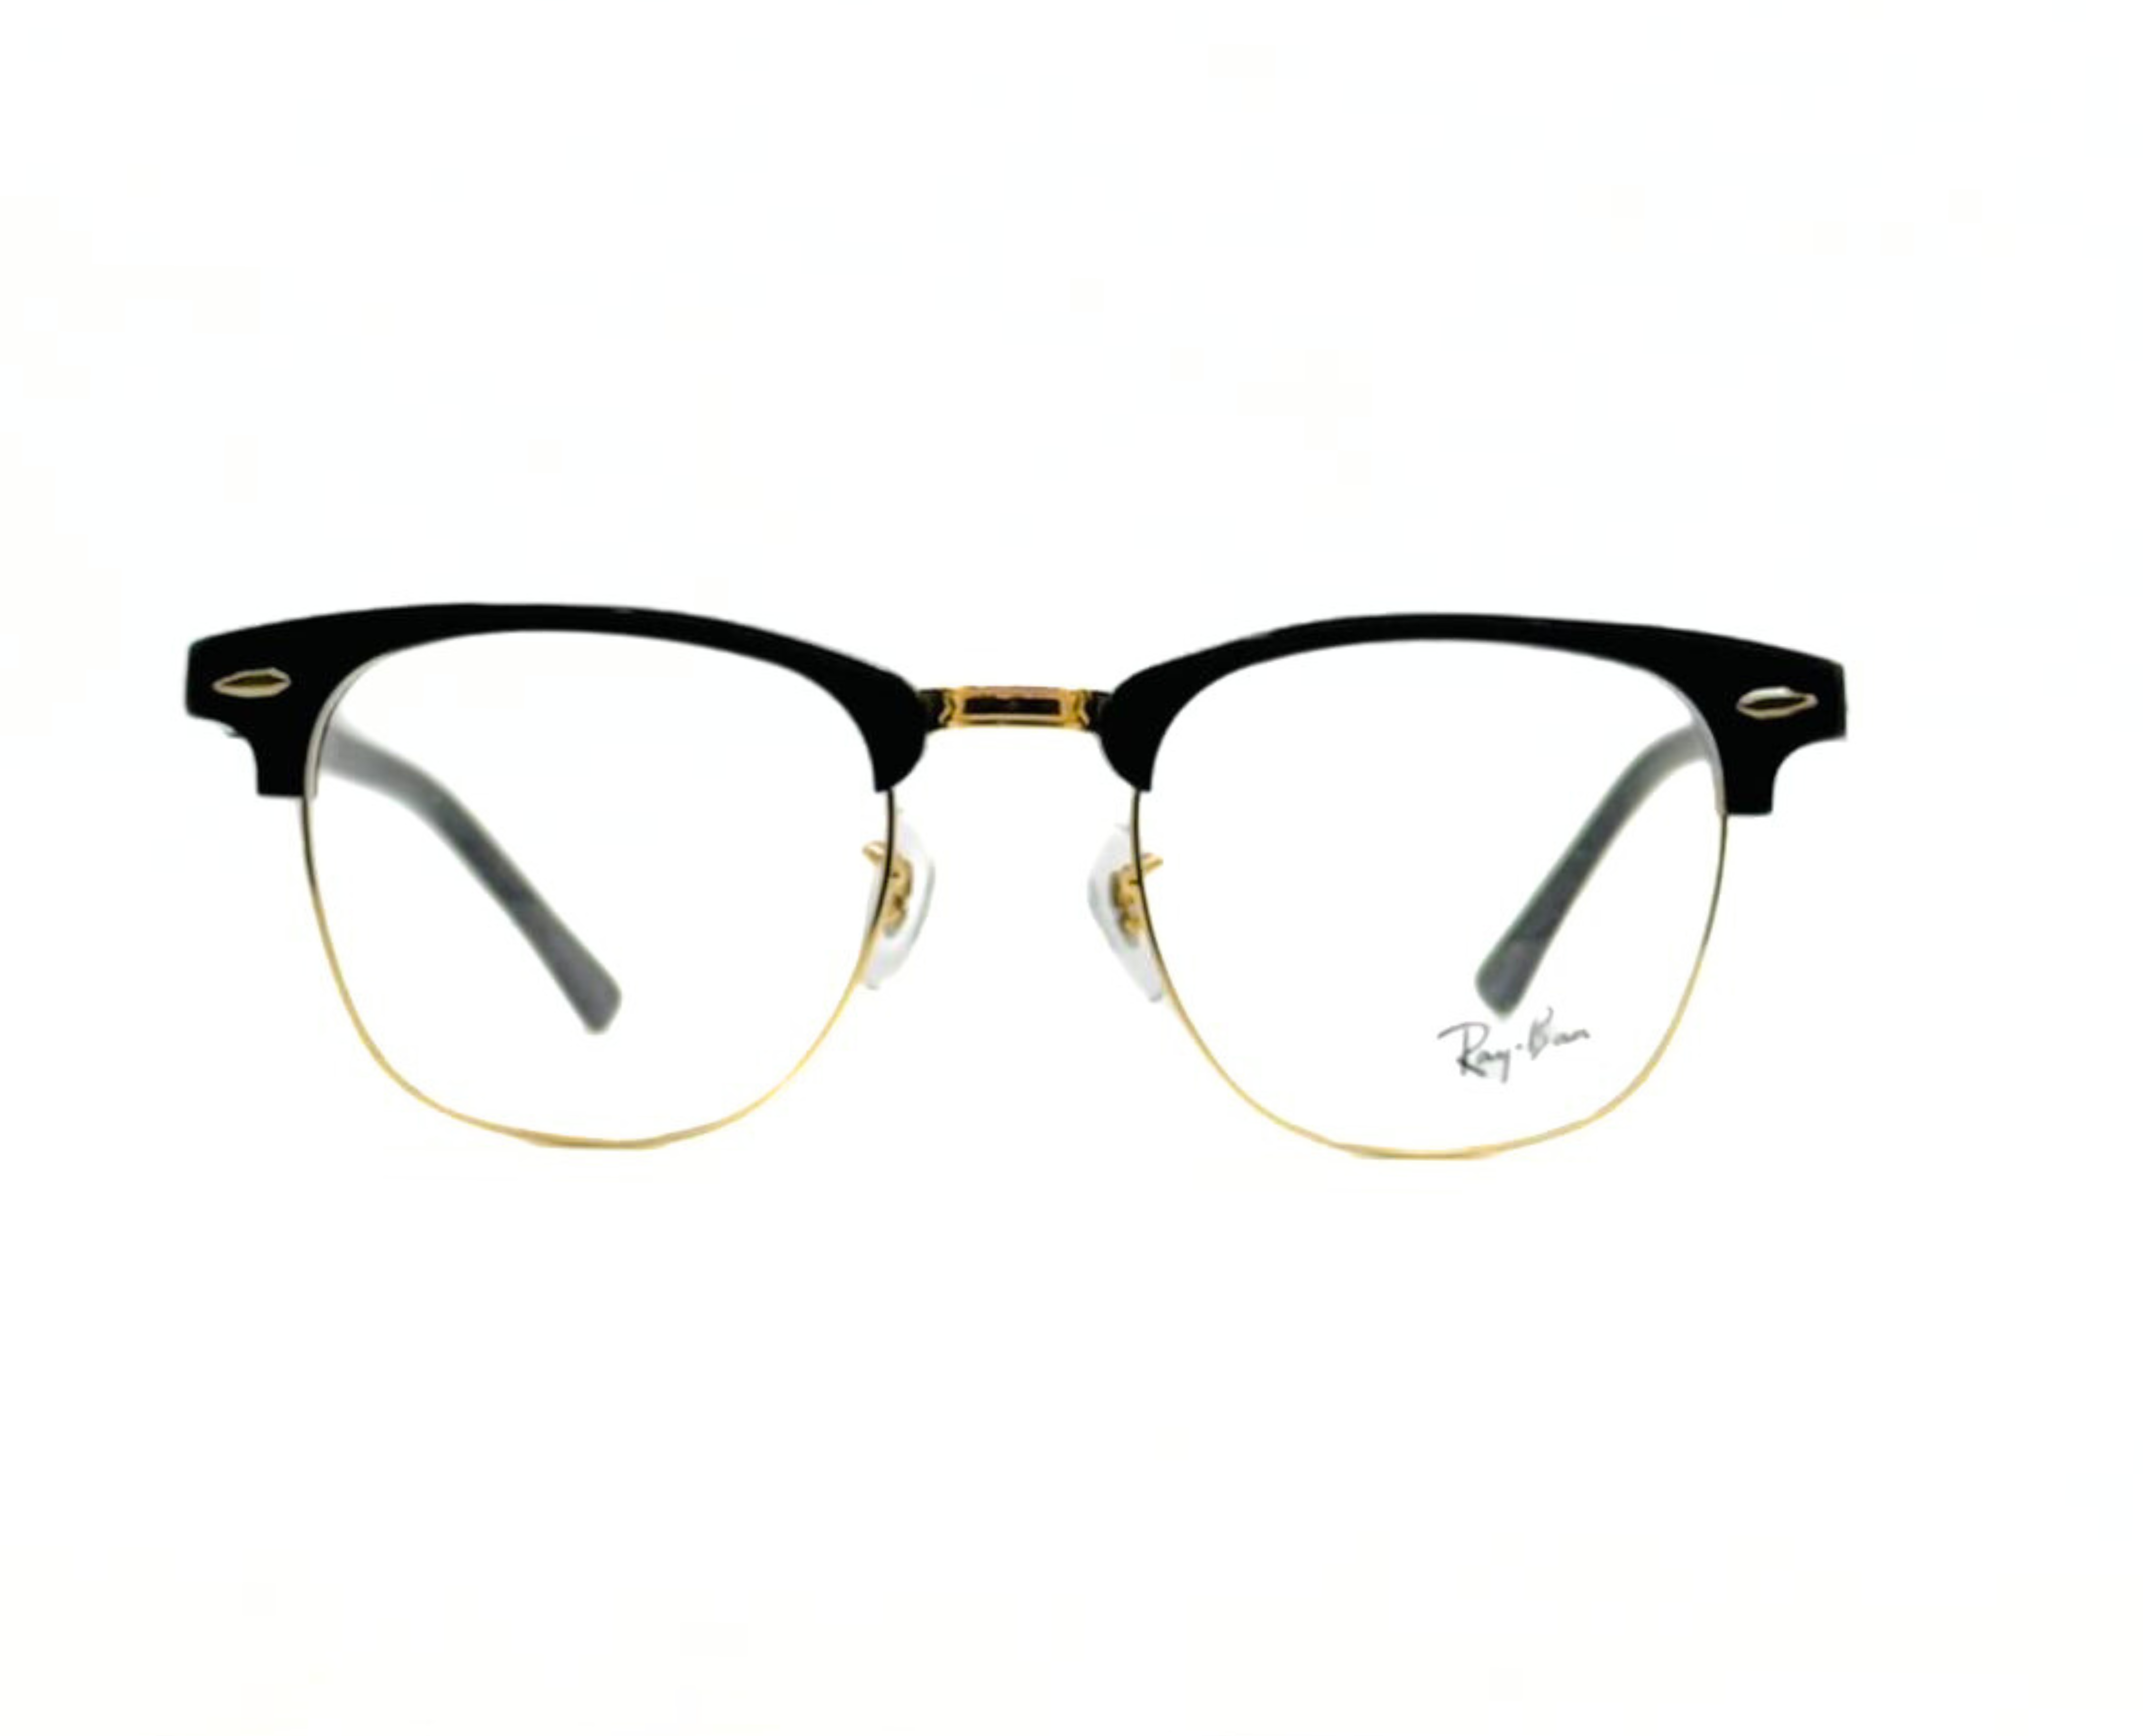 NS Luxury - J17 - Black Gold - Eyeglasses